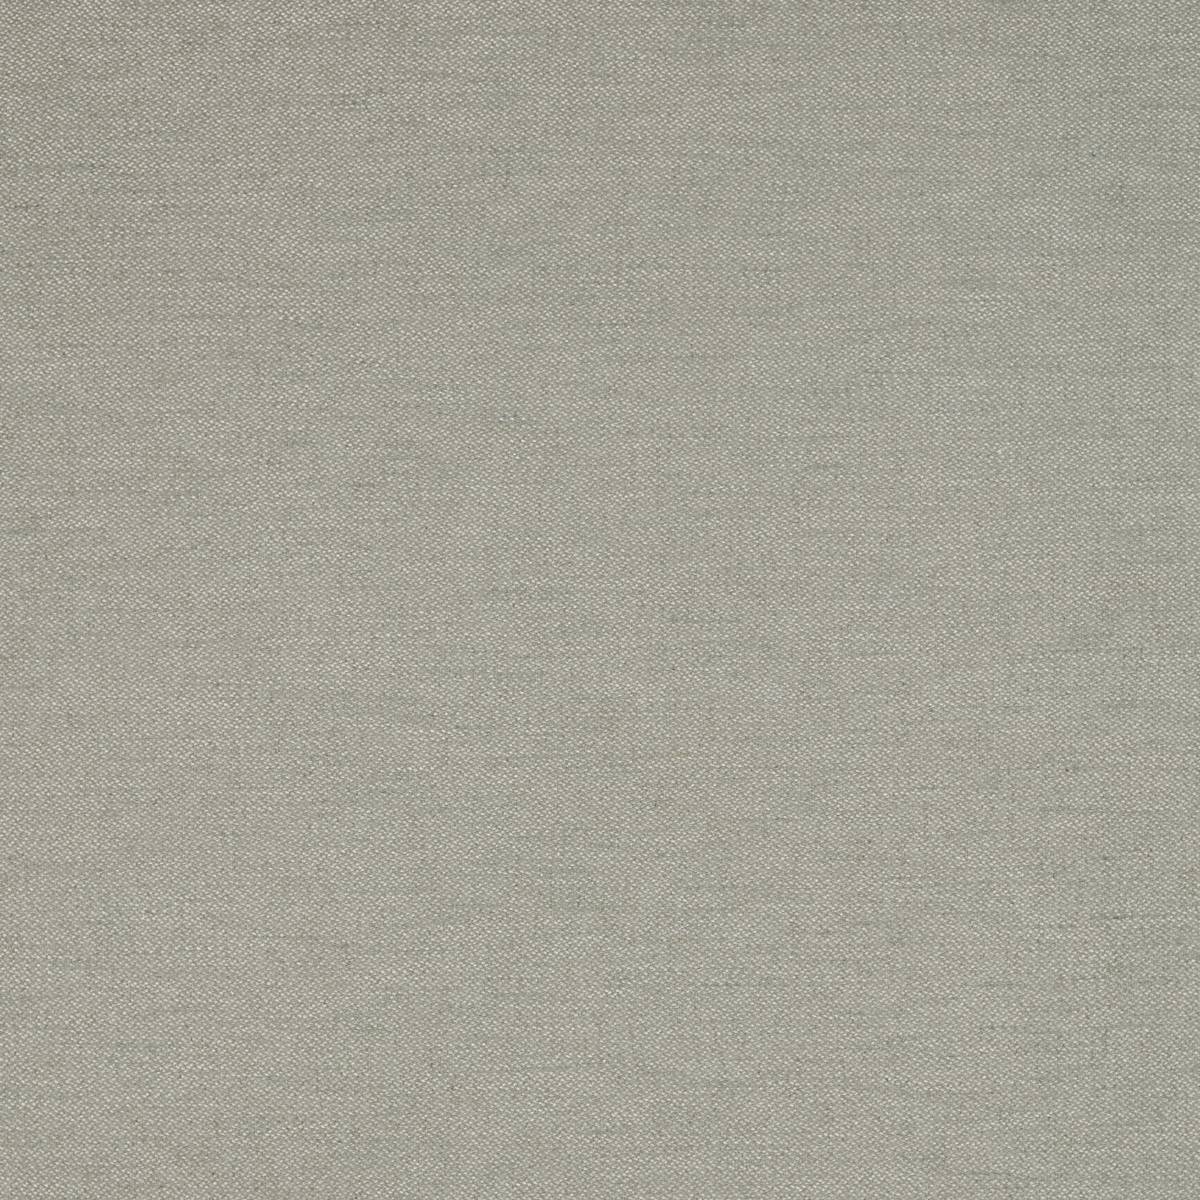 Curlew Teal/Flint Fabric by Sanderson